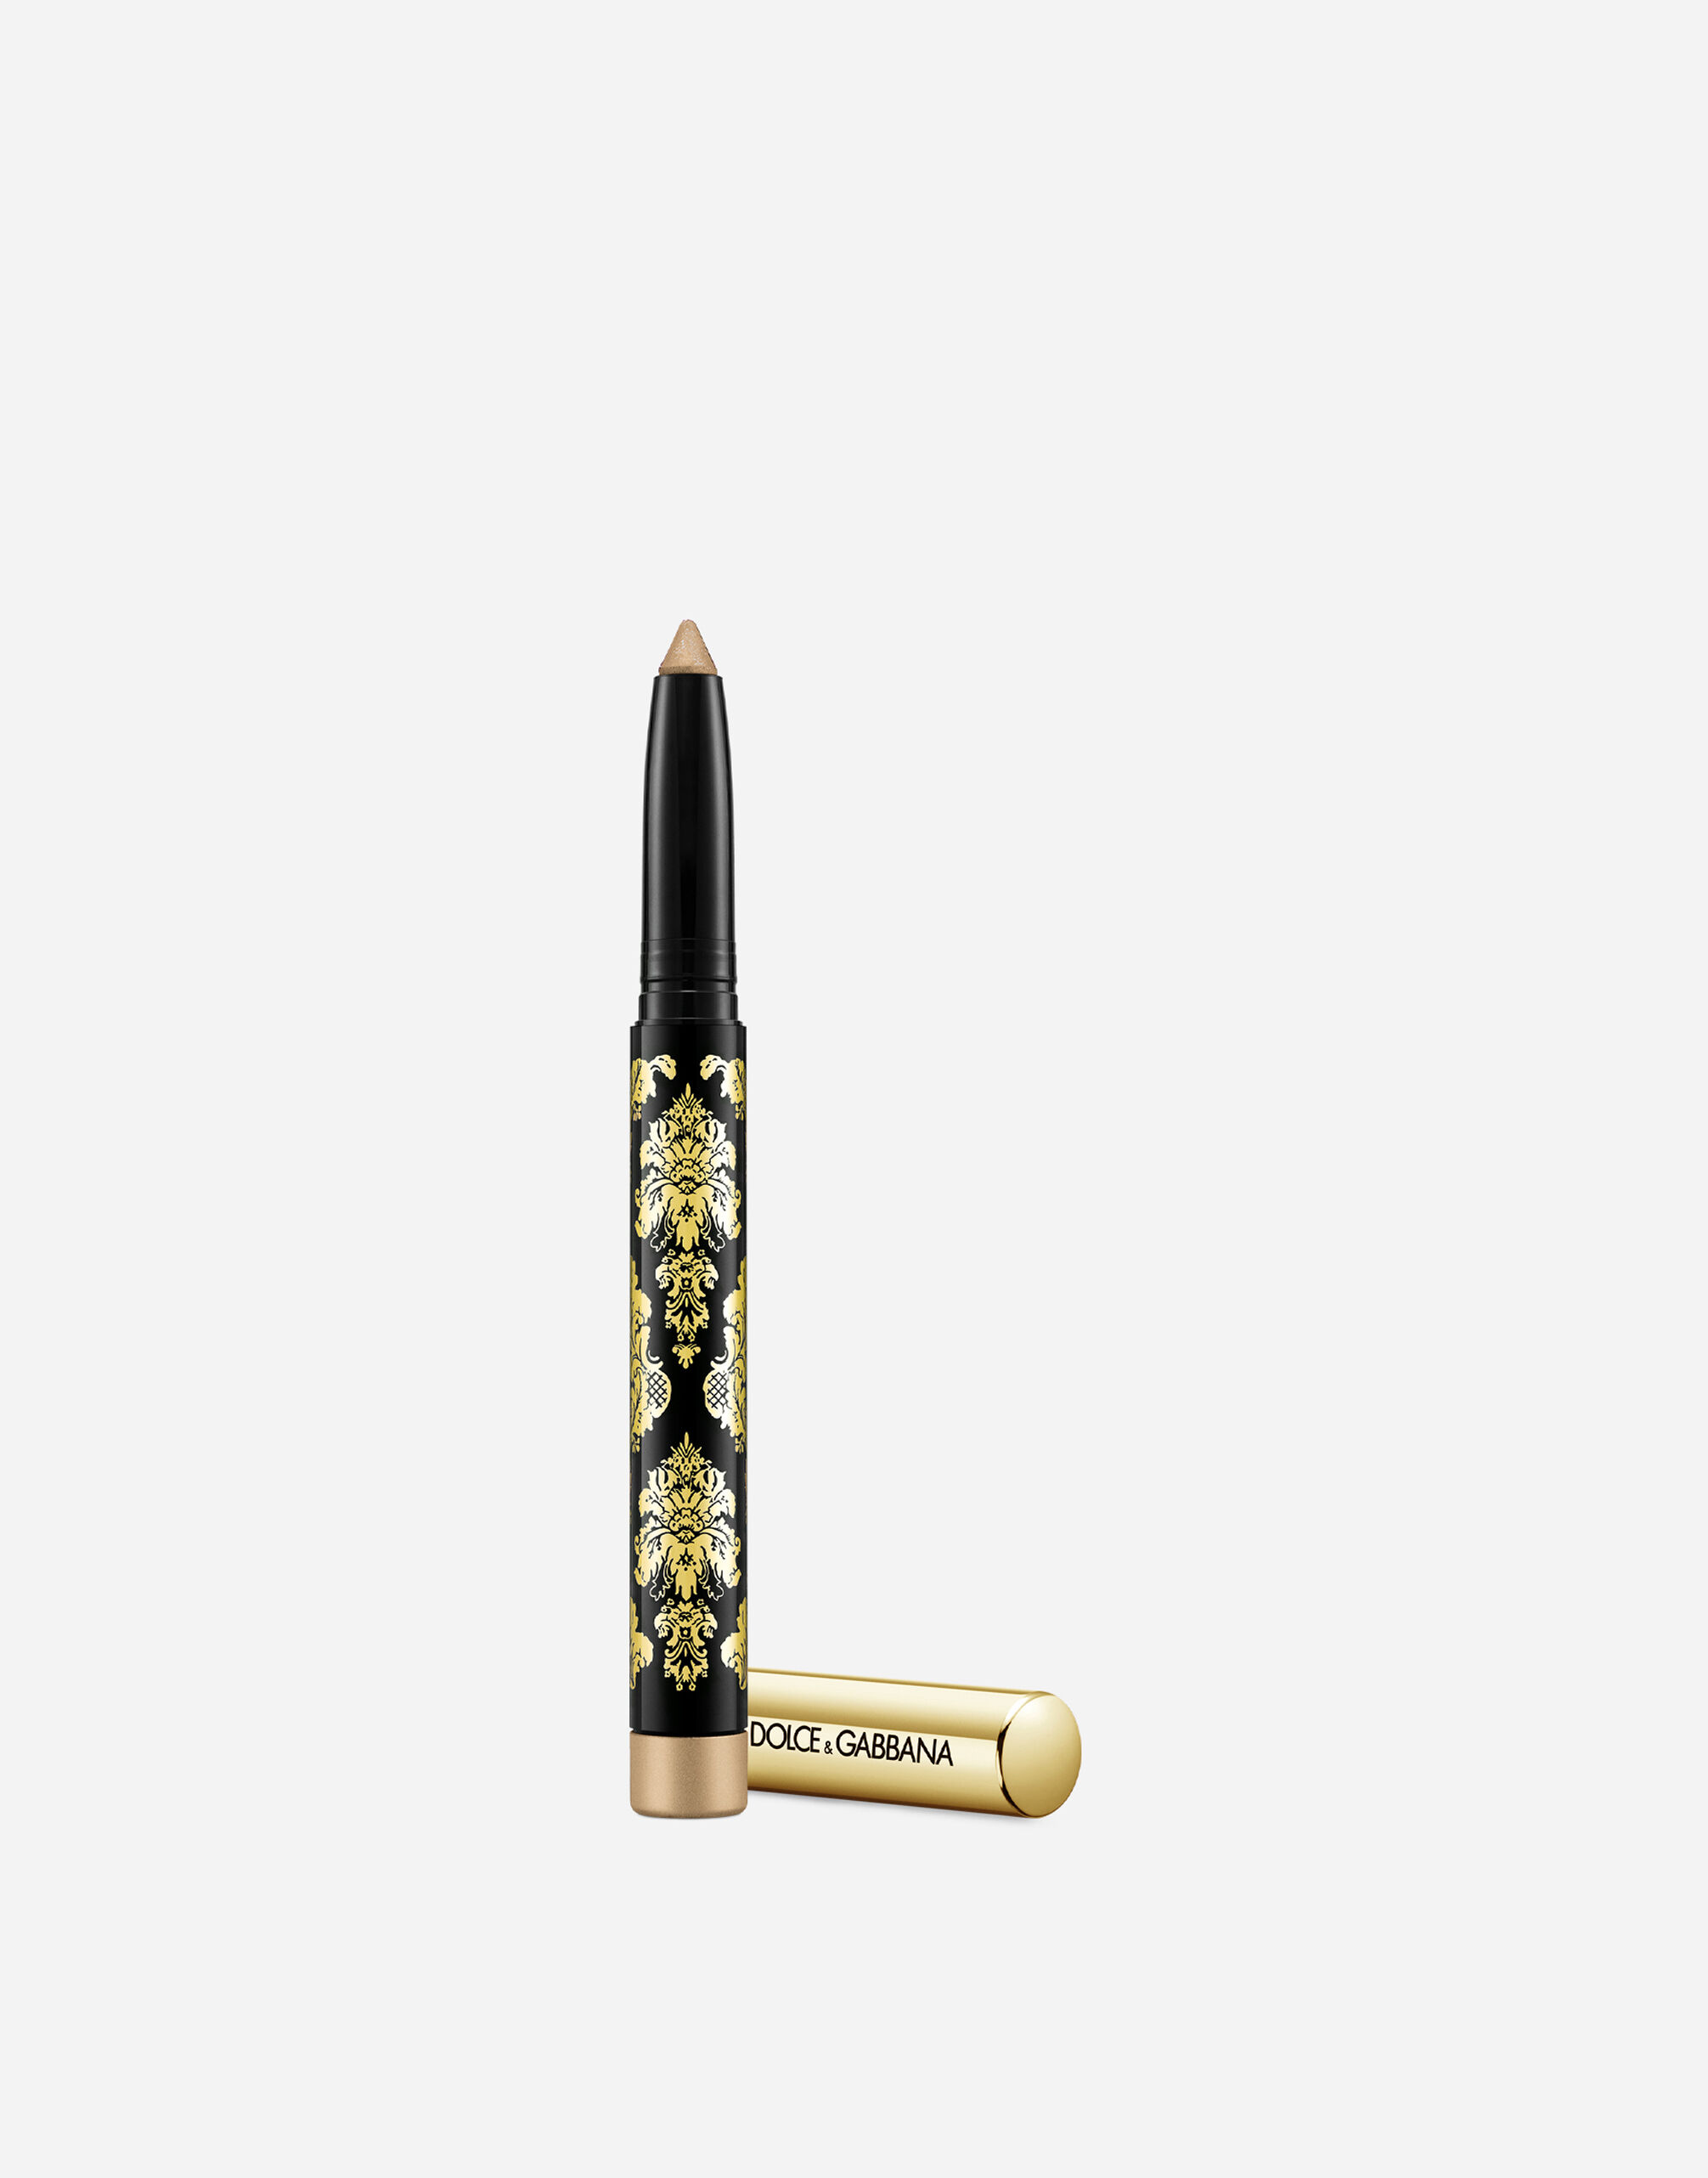 Тени-карандаш для глаз Dolce & Gabbana Intenseyes кремовые, №5 Taupe, 1,4 г карандаш кайал для глаз dolce